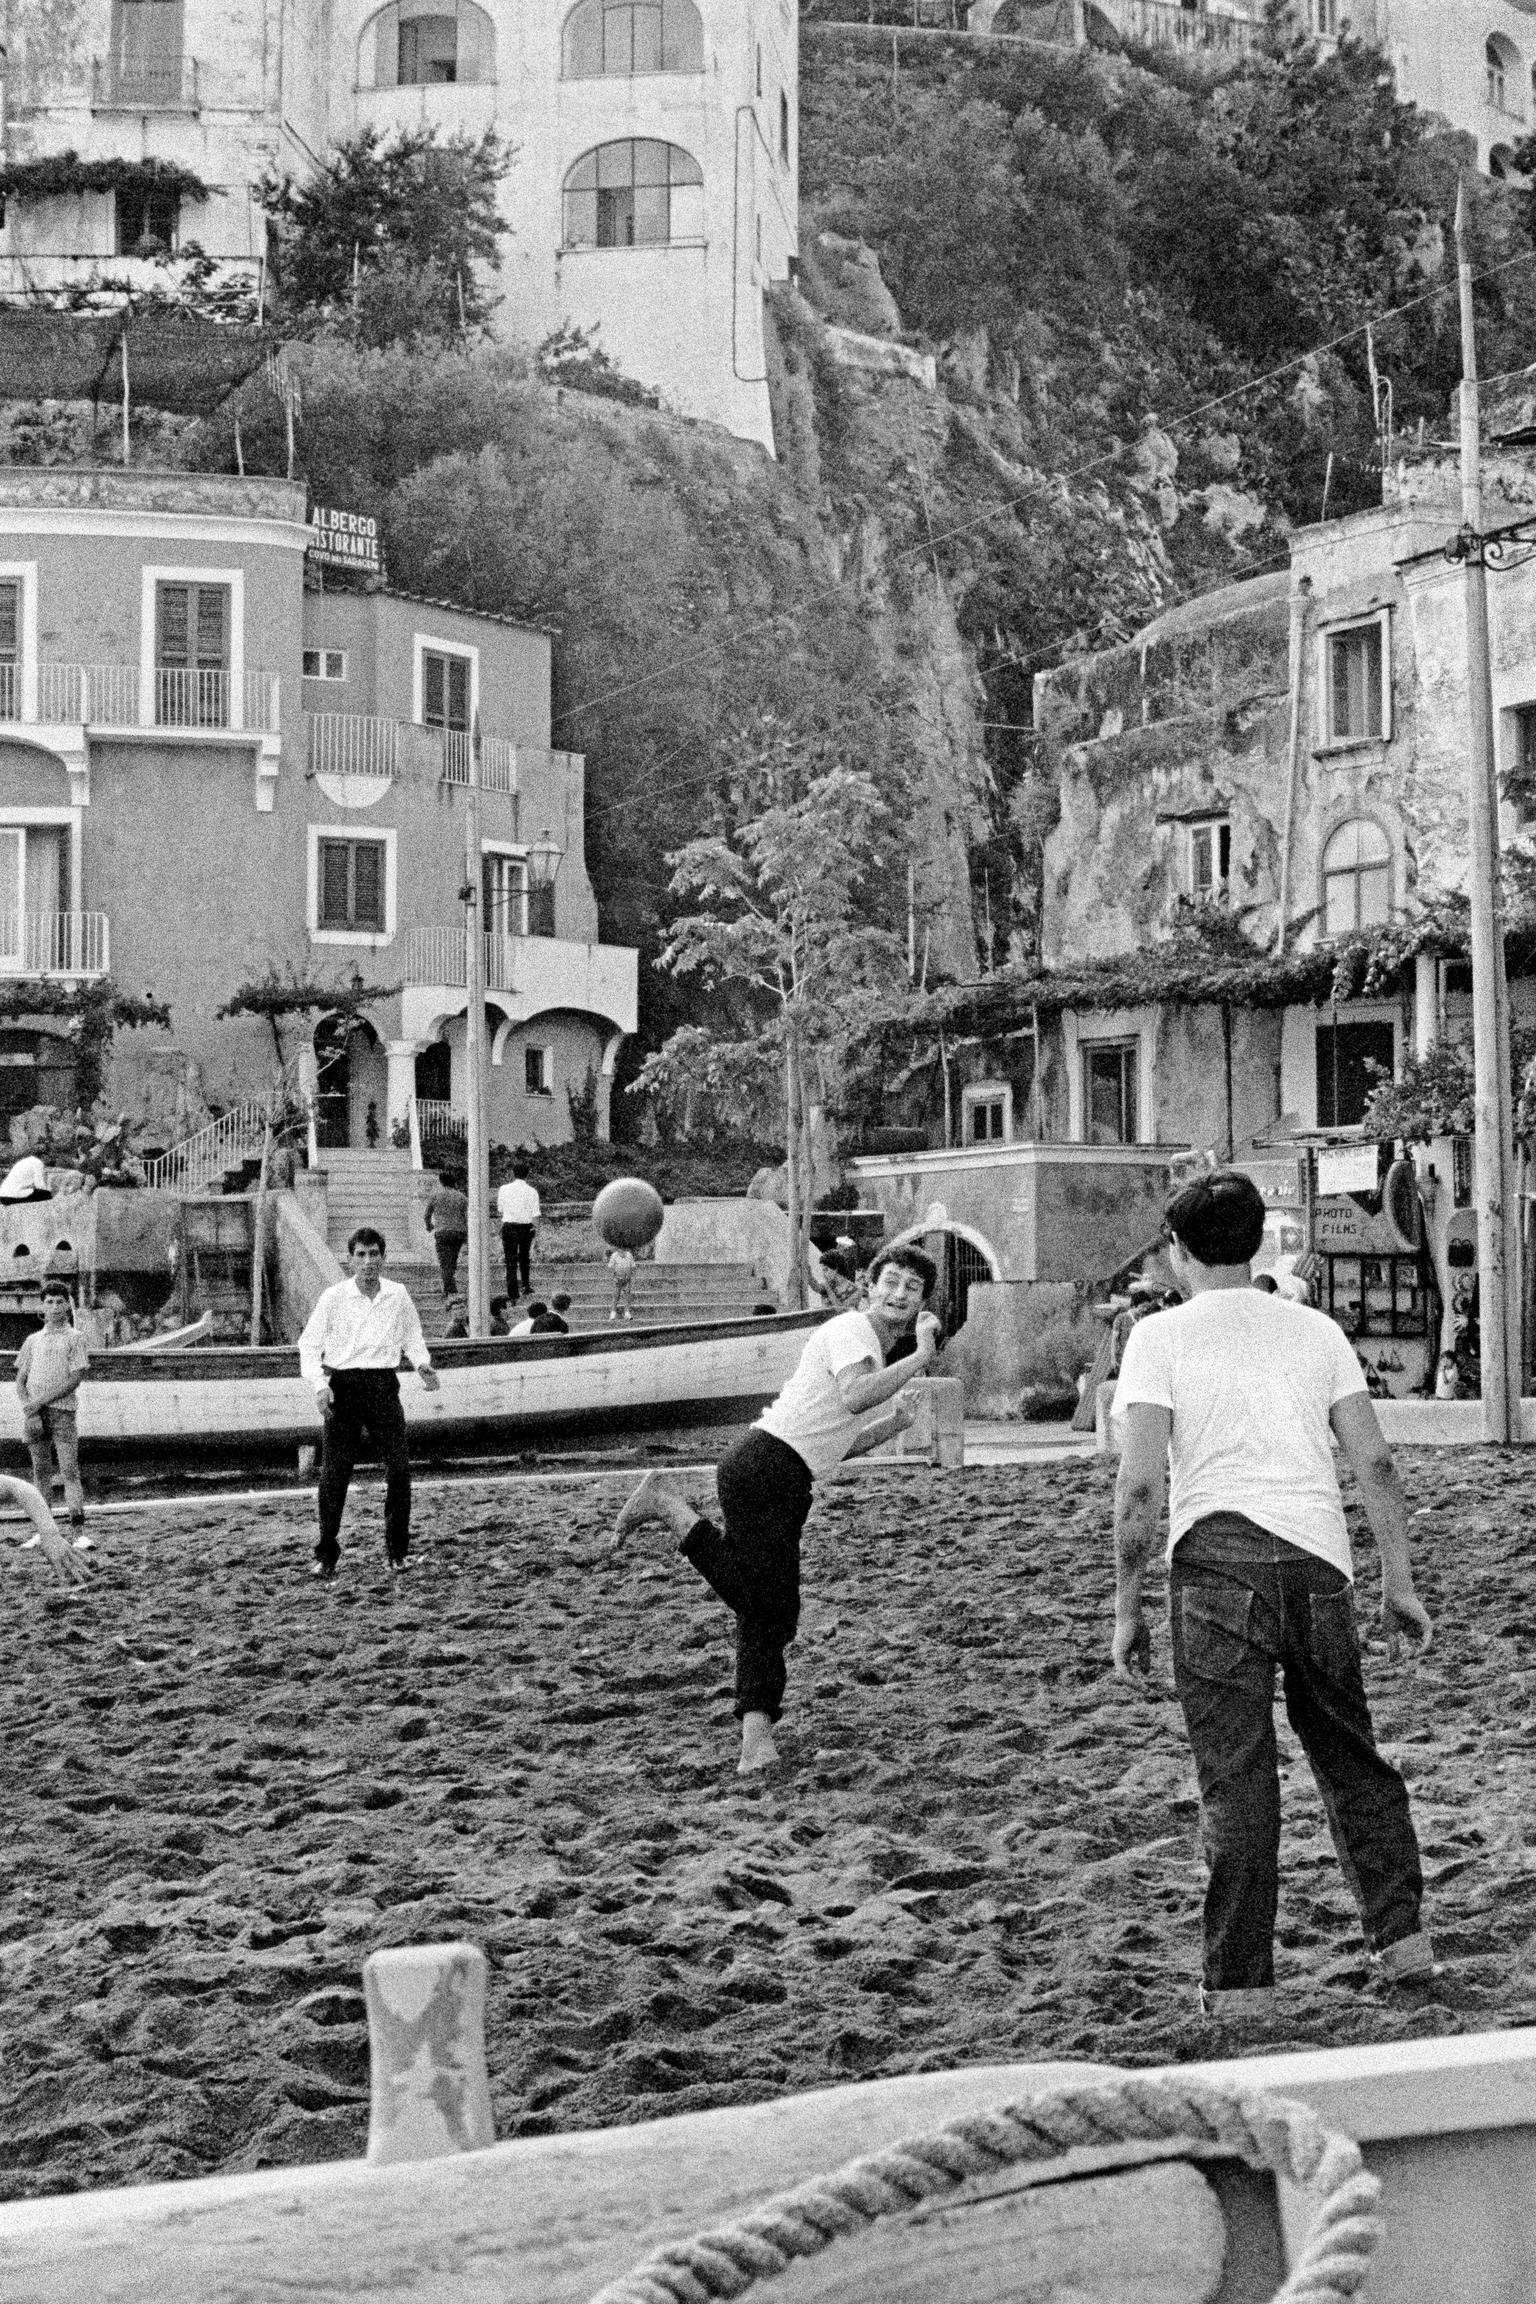 Football on the beach. Positano. Italy